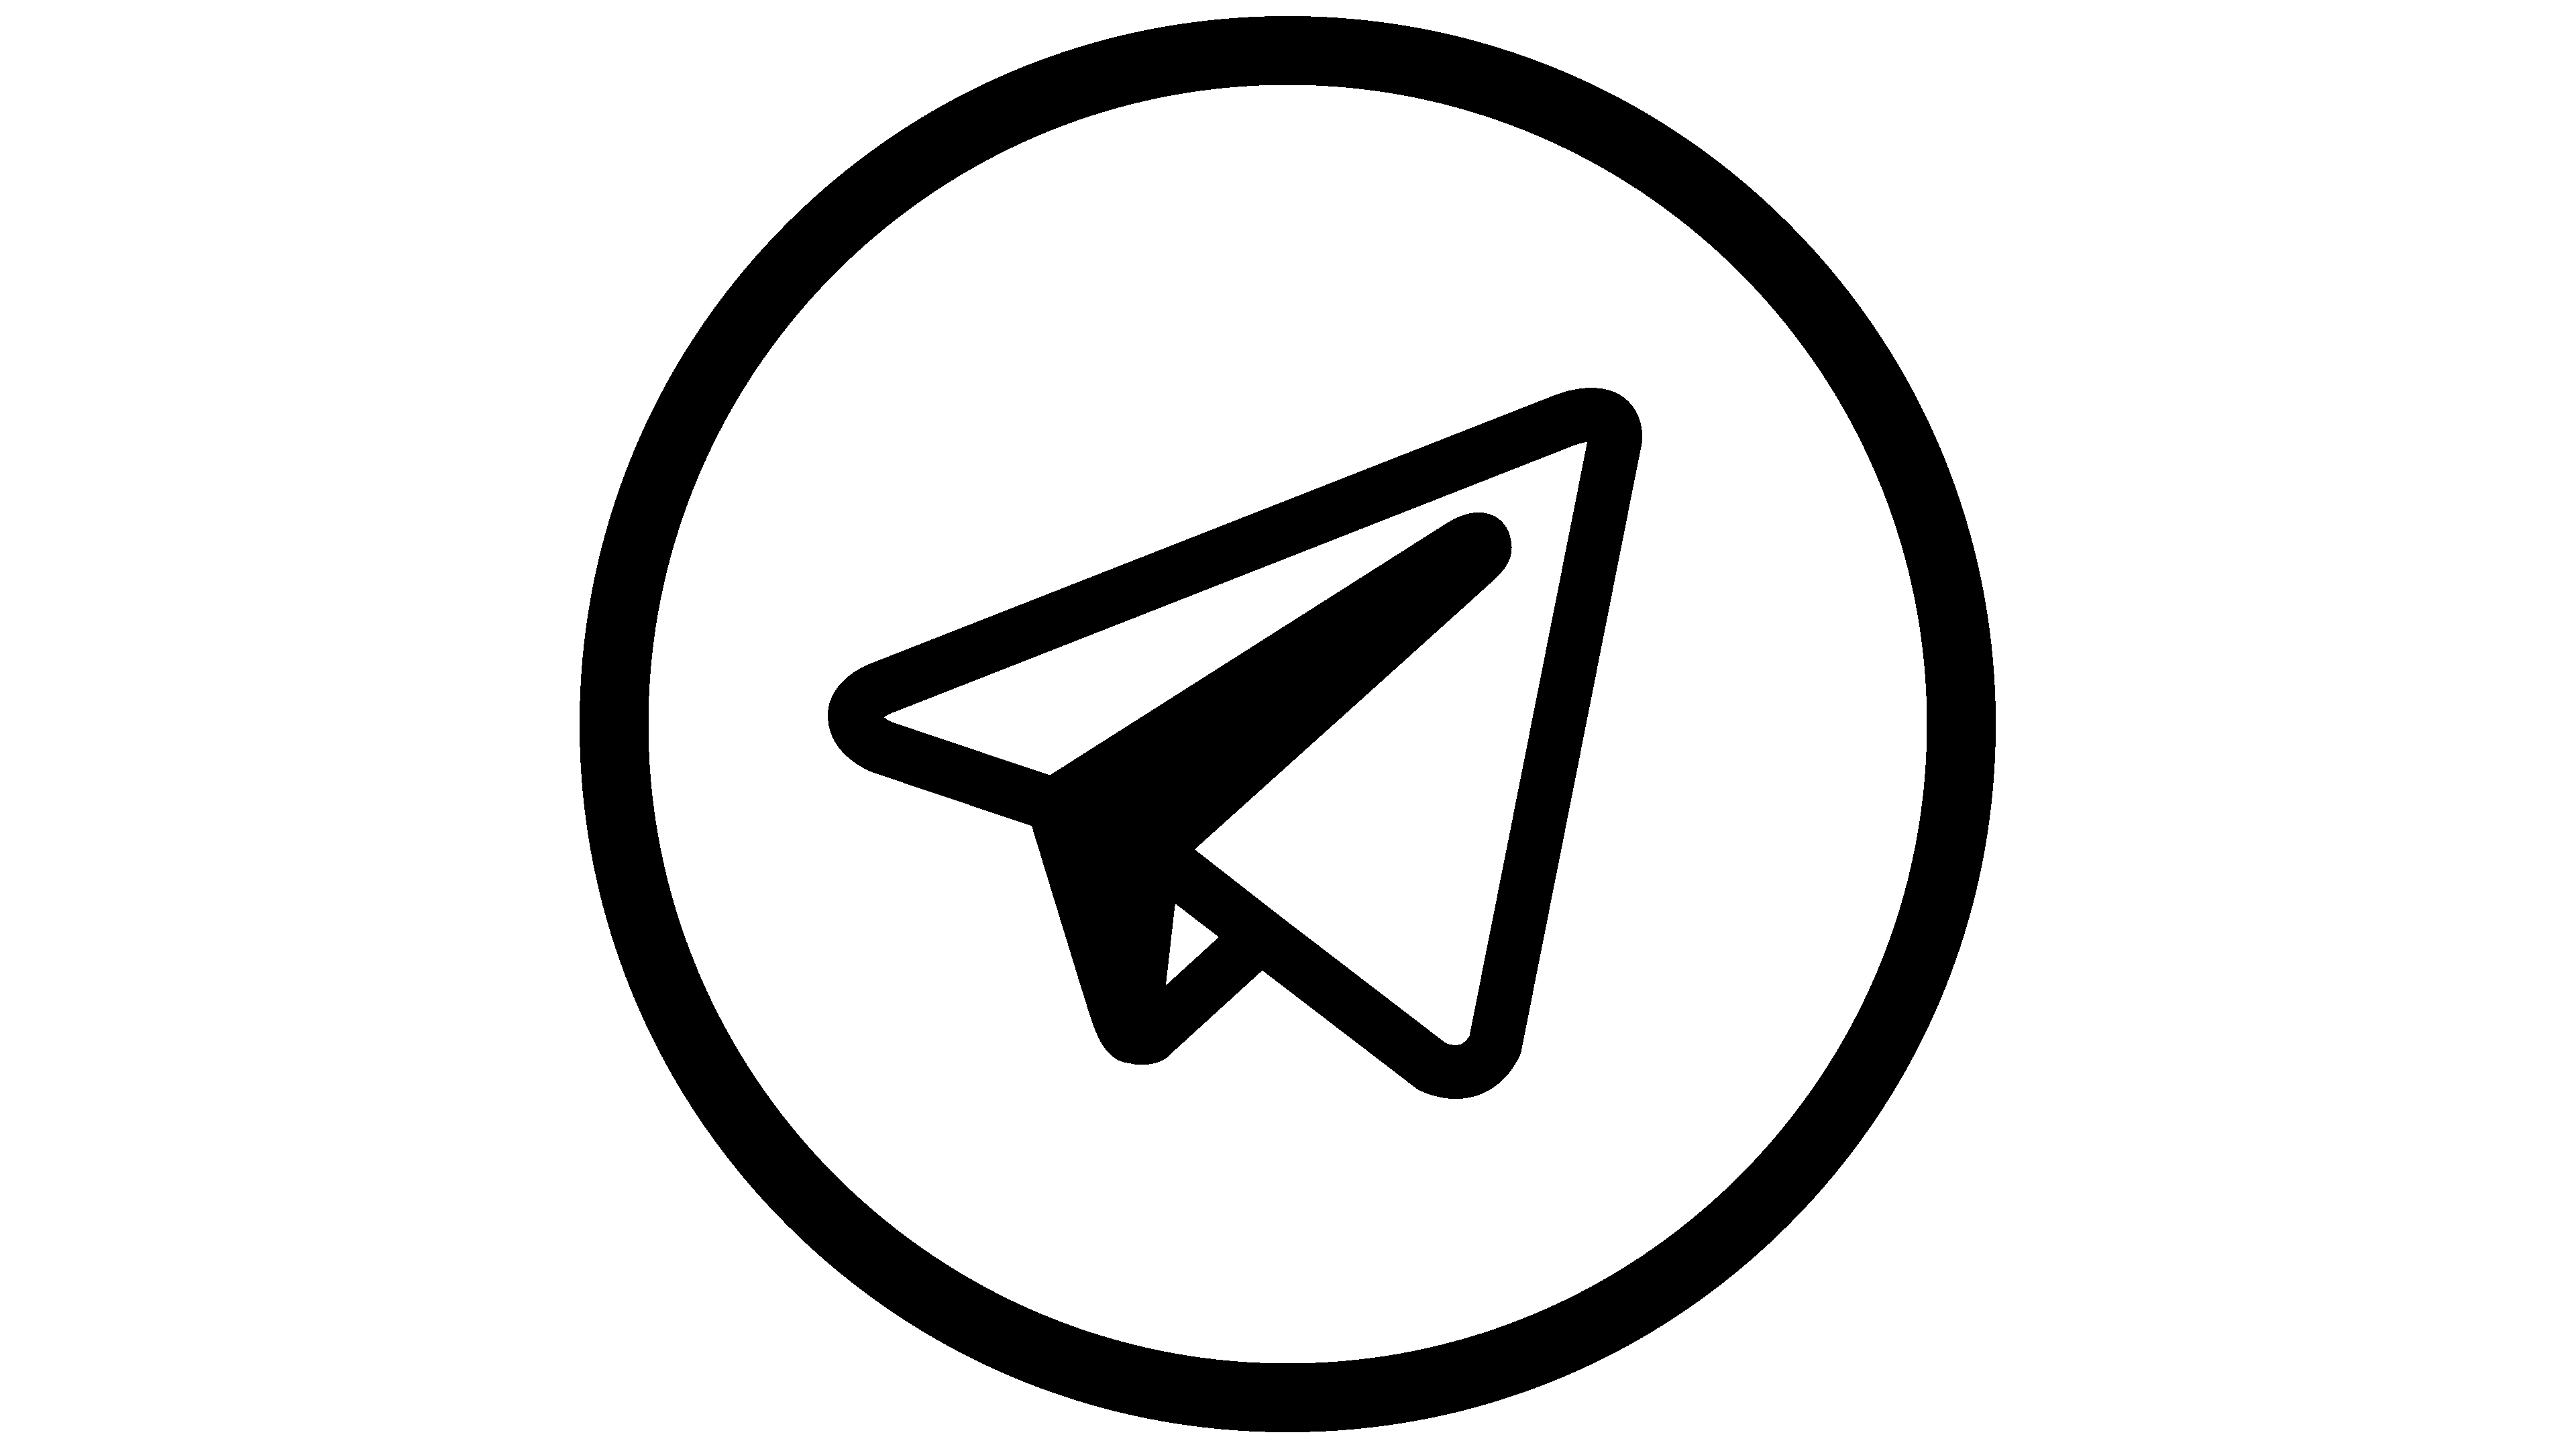 Telegram pictures. Telegram лого. Пиктограмма телеграмм. Значок Telegram PNG. Прозрачный значок телеграмм.